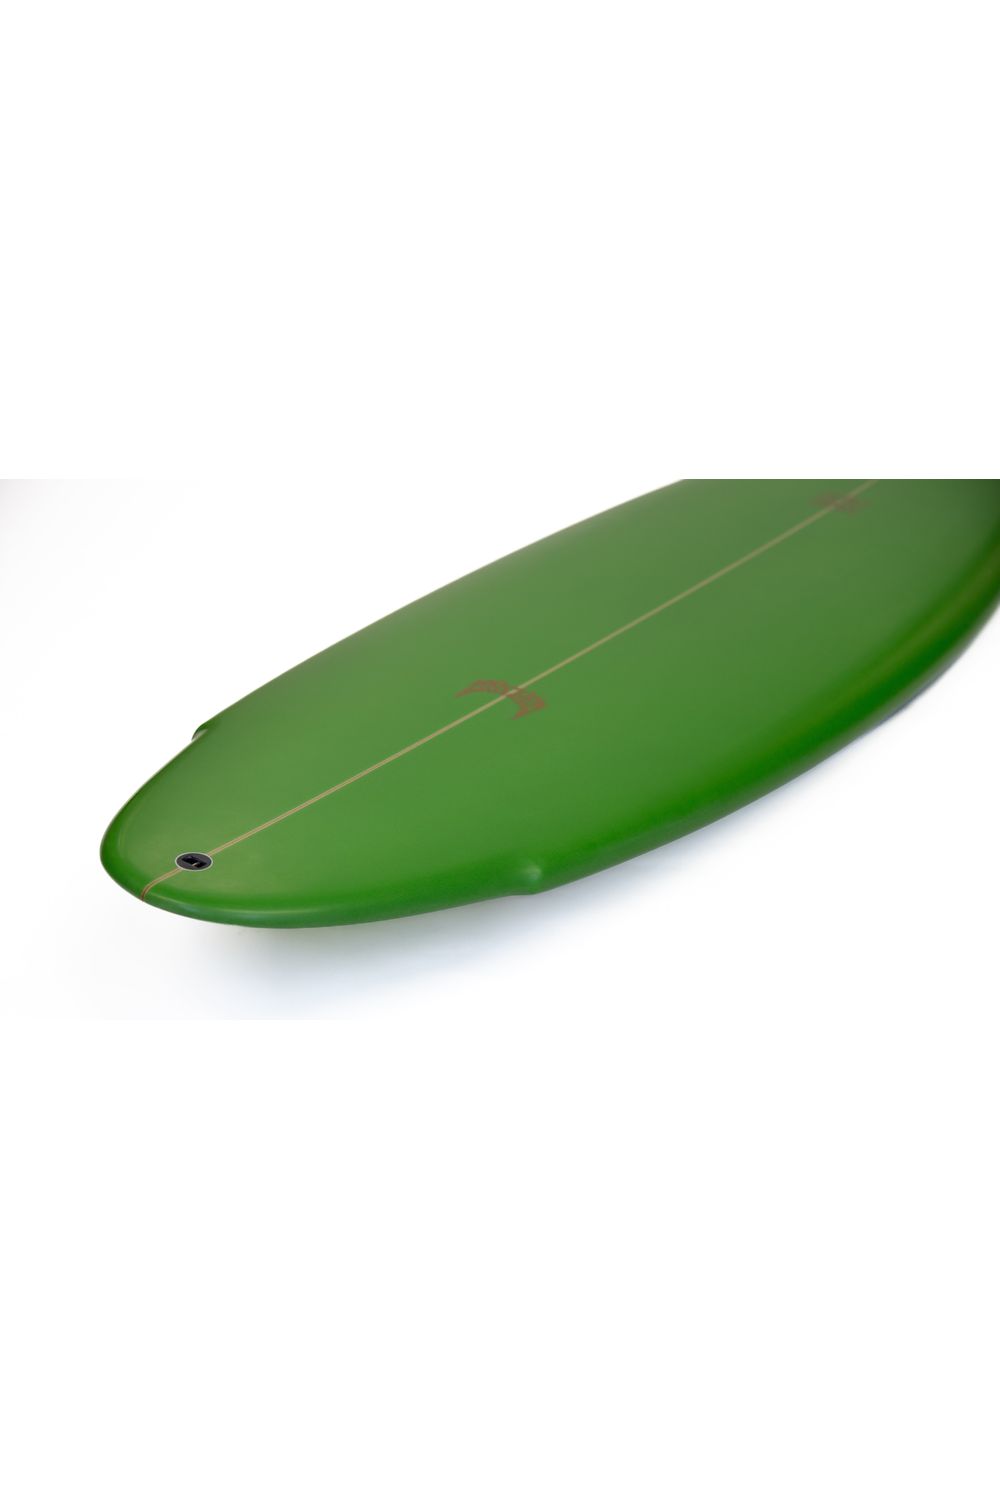 Lost Retro Tripper, 5'11 Surfboard 35.00L PU Futures 3 Fins